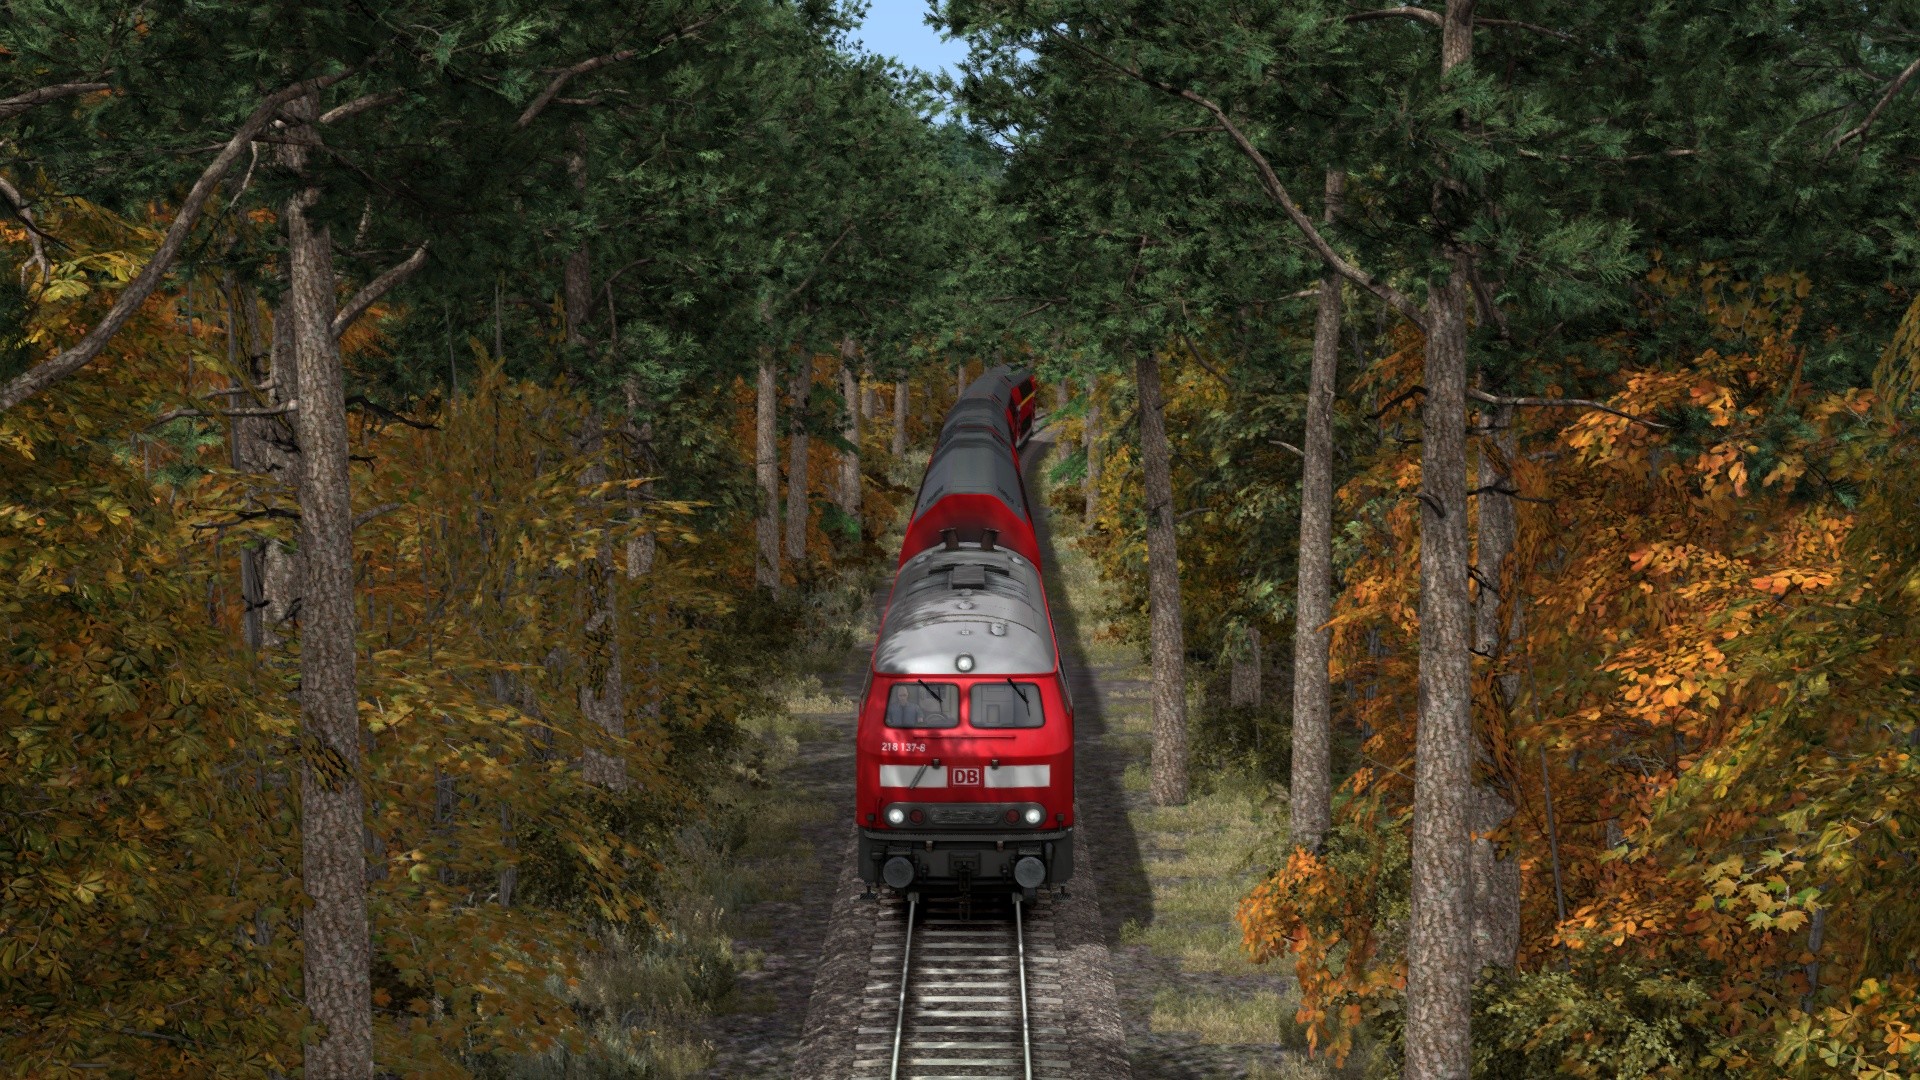 Train Simulator: Norddeutsche-Bahn: Kiel - Lübeck Route Add-On DLC Steam CD Key